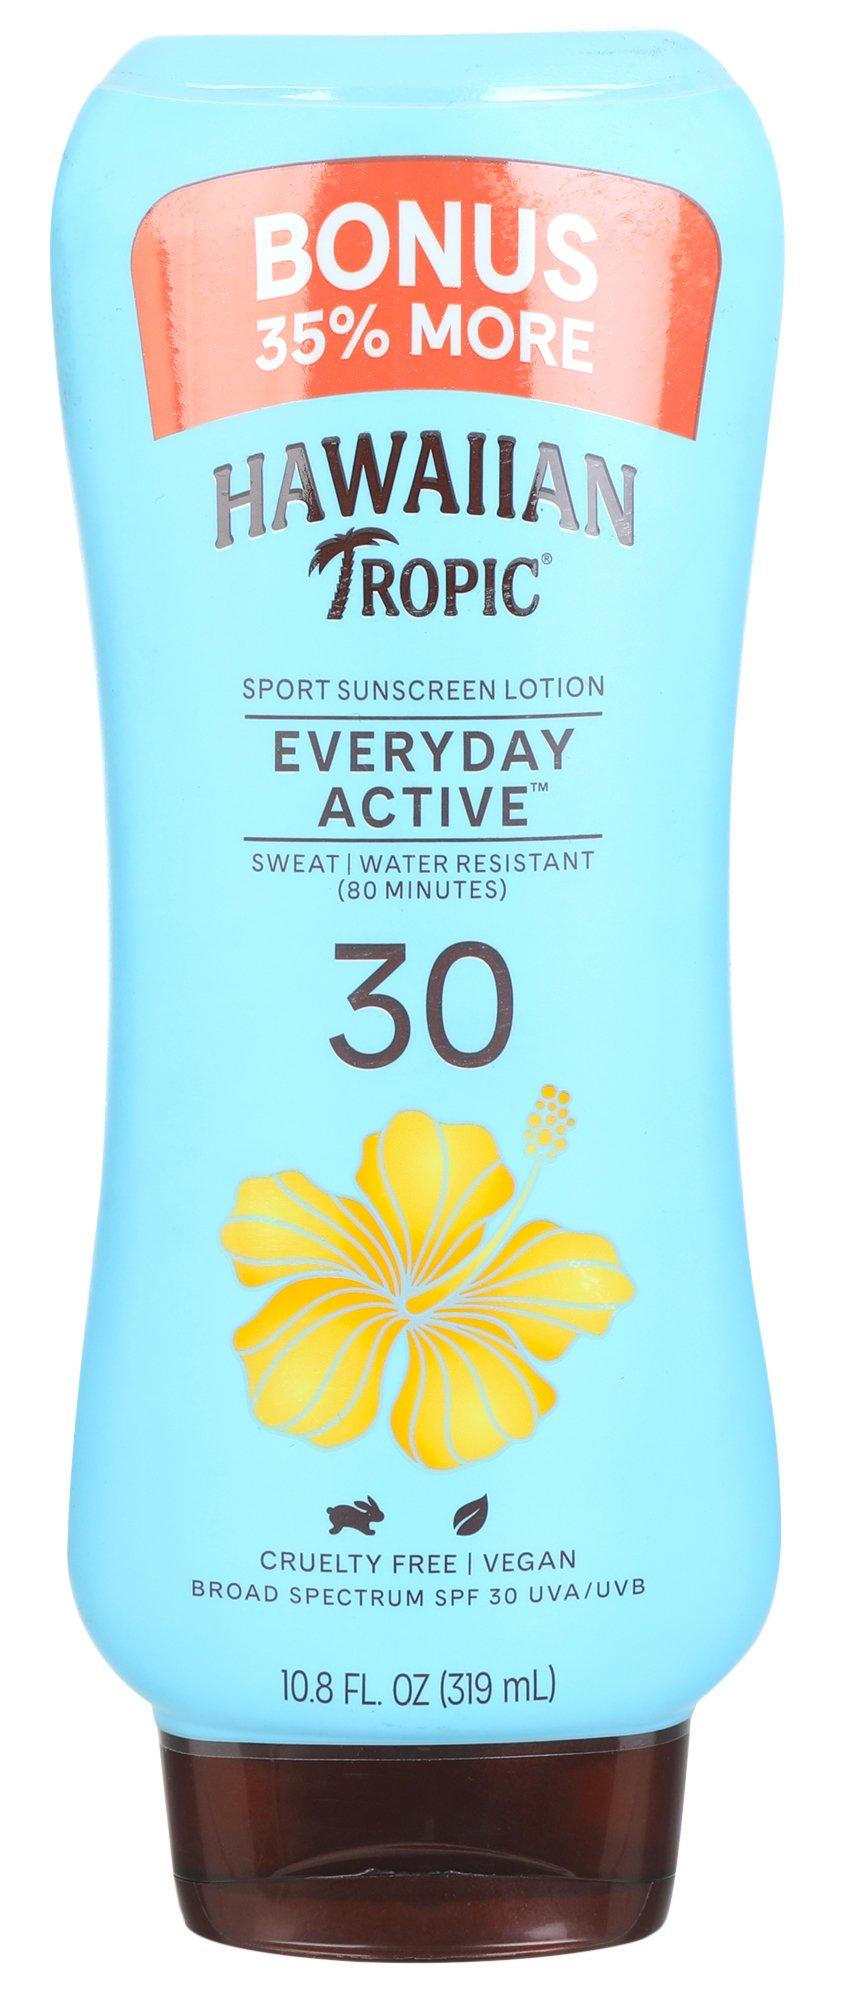 10 oz Tropic Everyday Active Sunscreen